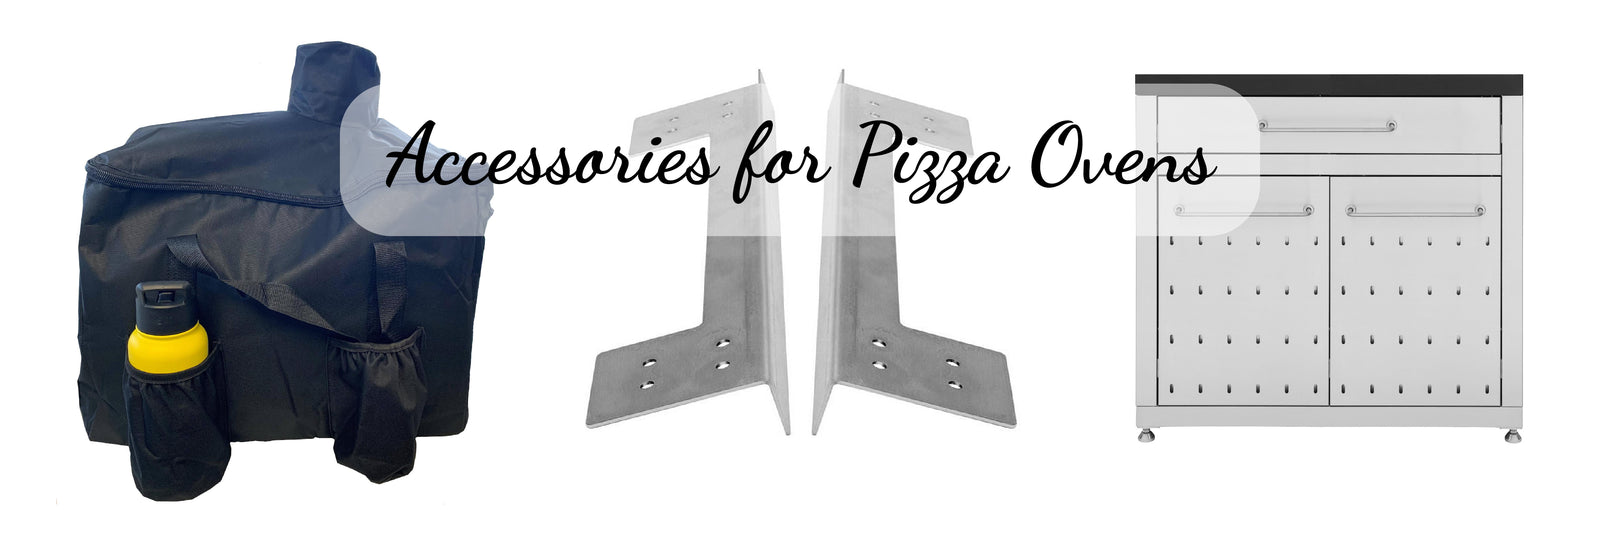 Pizza Oven Accessories Set